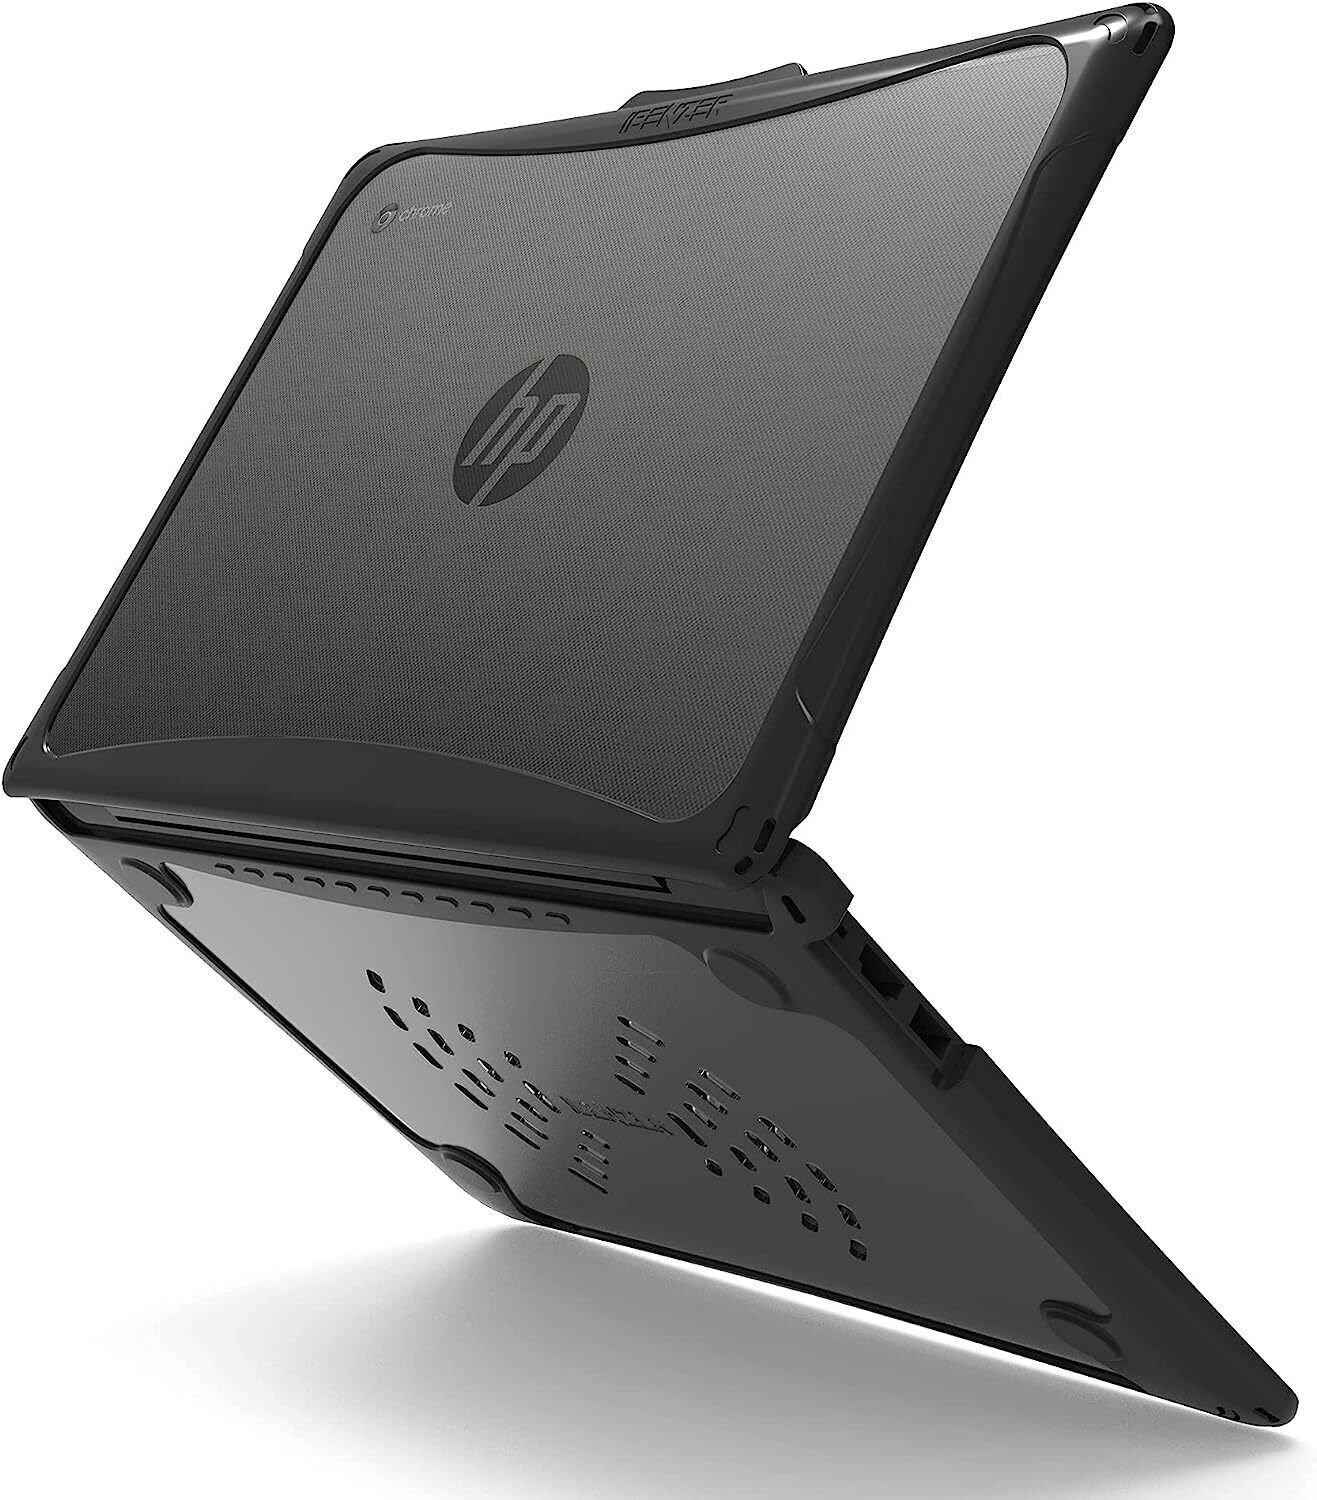 IBENZER Heavy Duty Case for HP G7 G6 Chromebook 14 inch 2021 2020 w/ Screen Lock